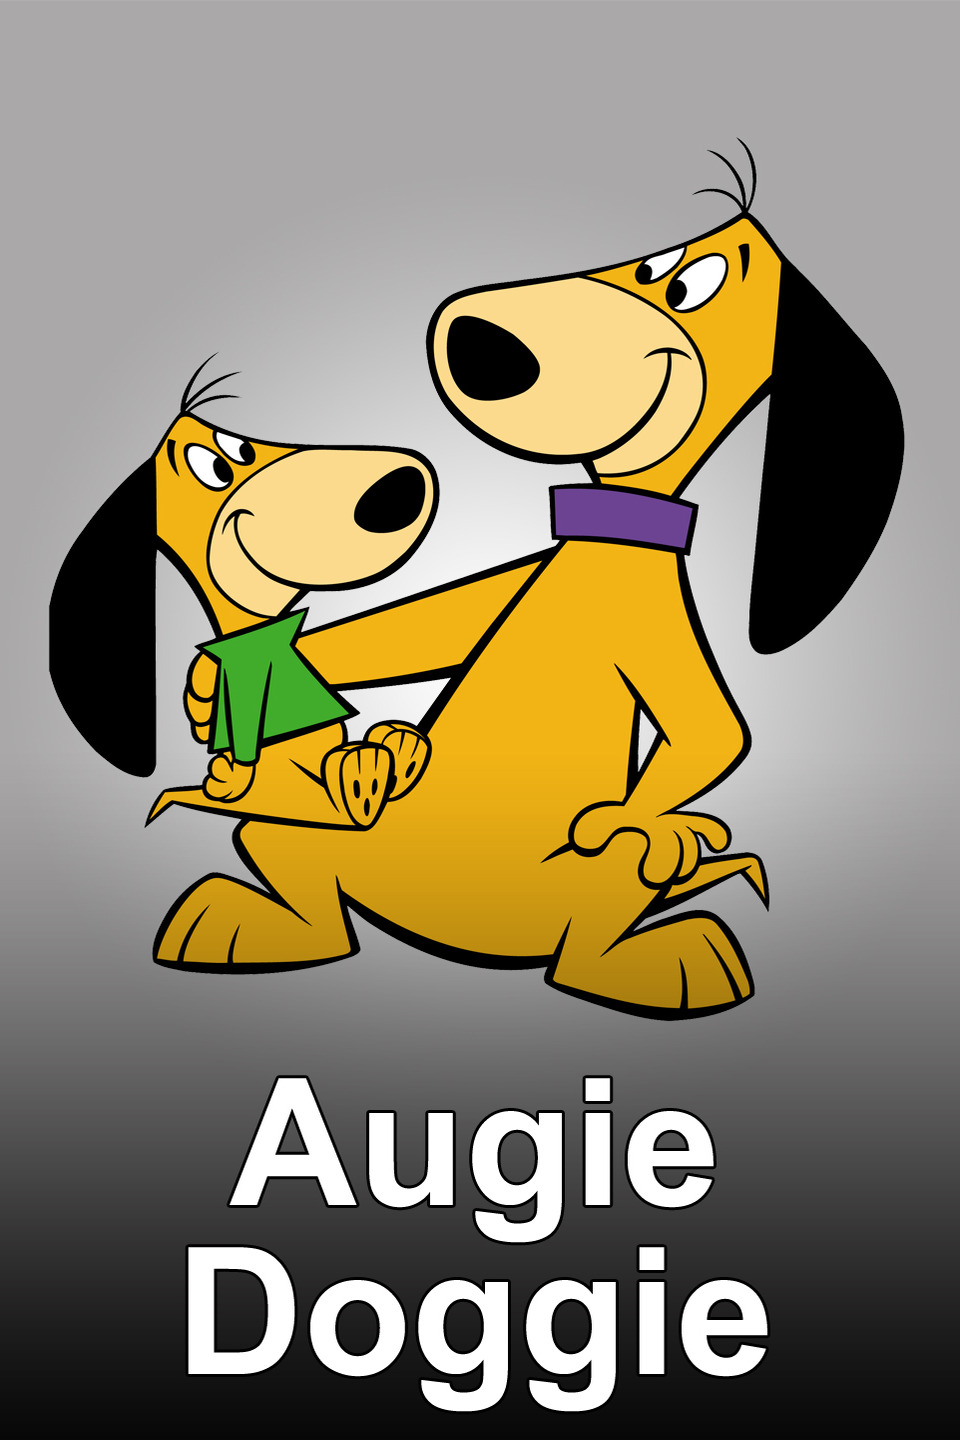 Auggie Doggie and Doggie Daddy